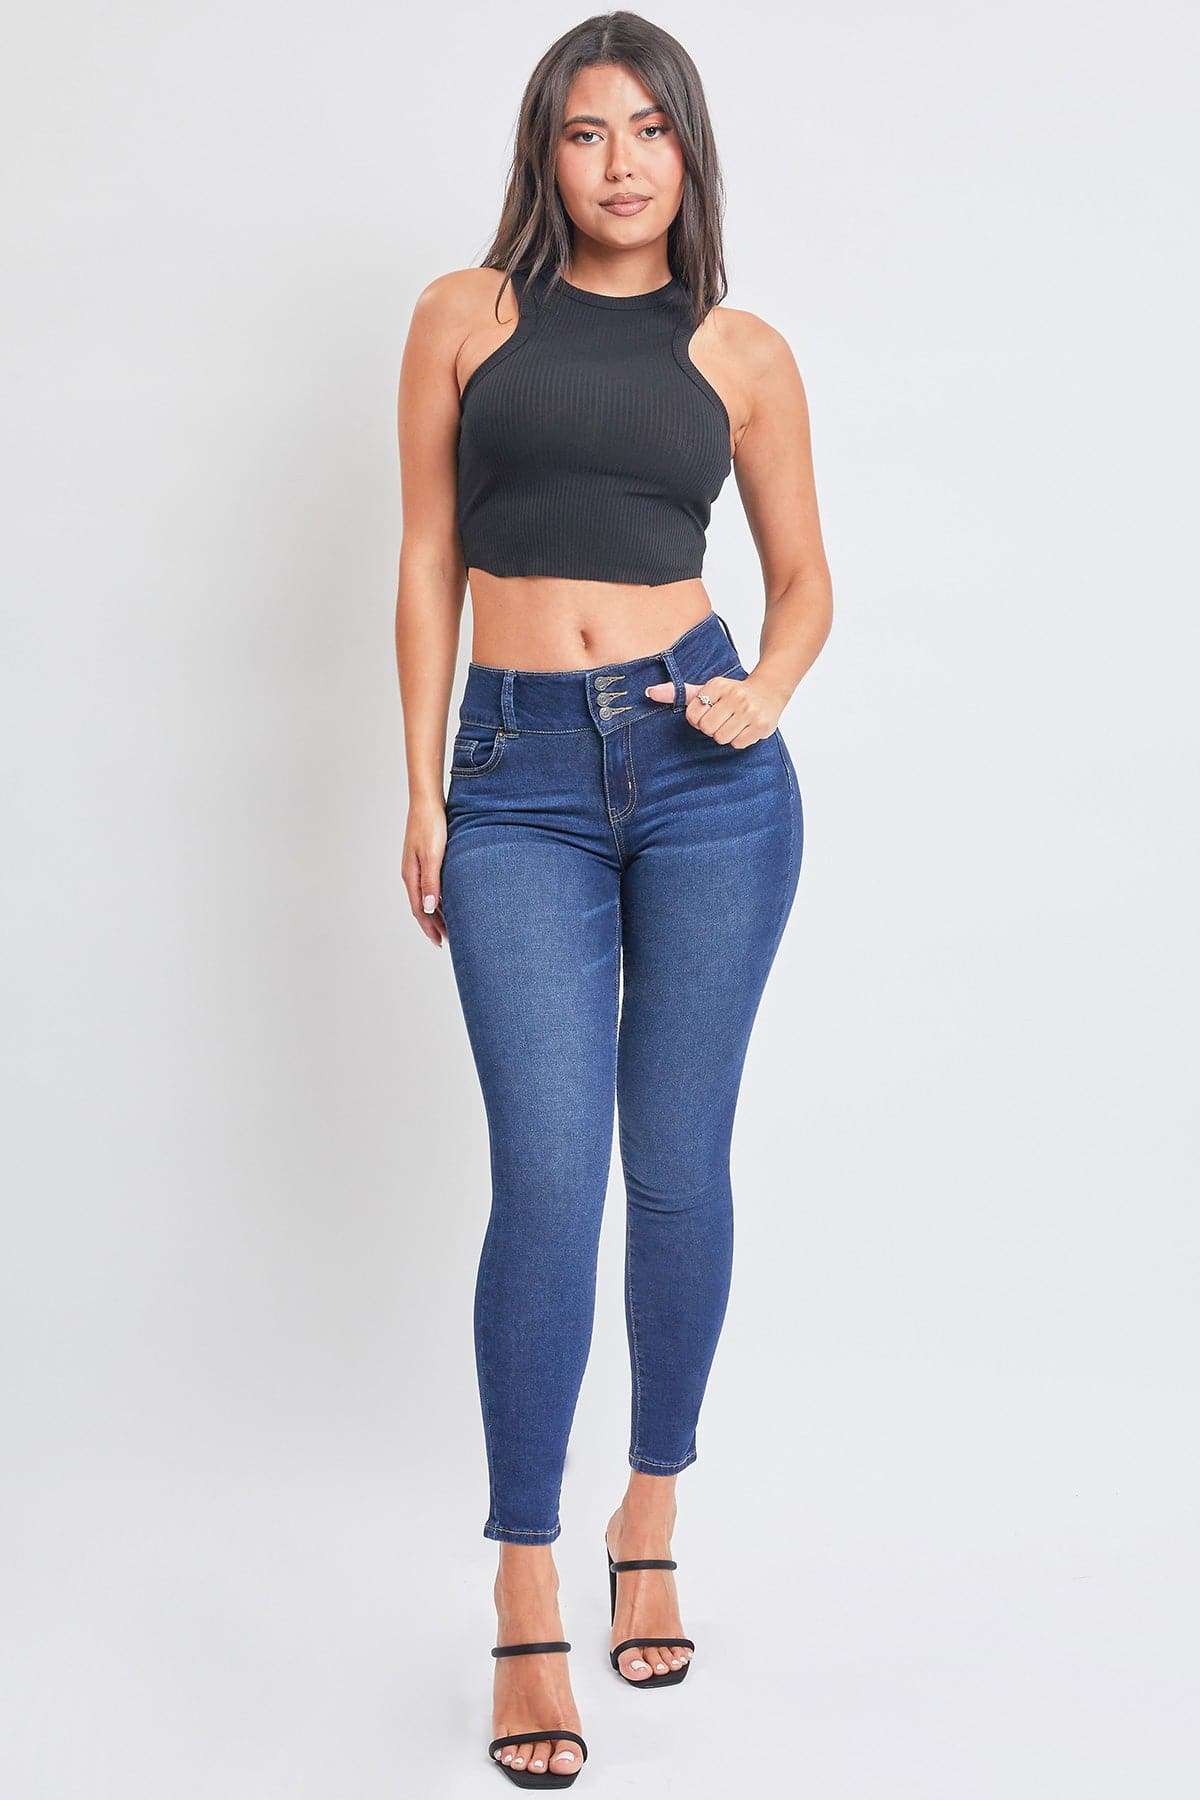 Women's Essential 3 Button Skinny Jeans from YMI – YMI JEANS